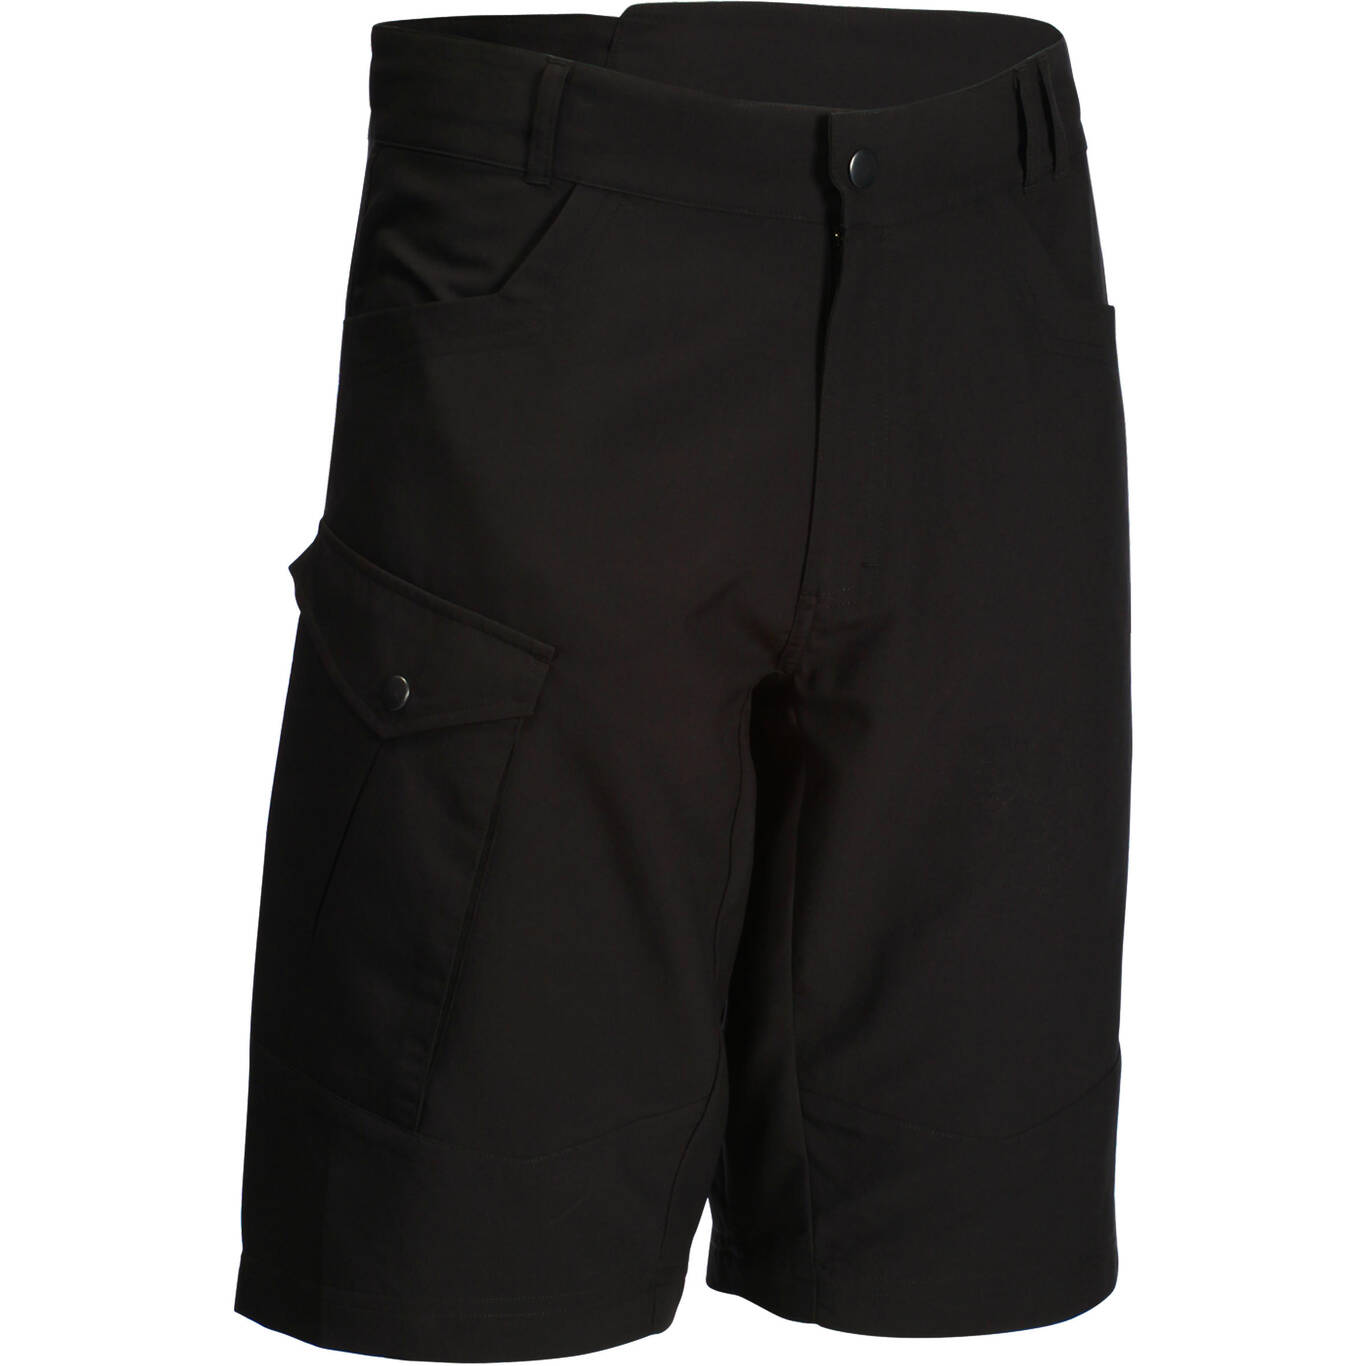 500 Mountain Bike Shorts - Black